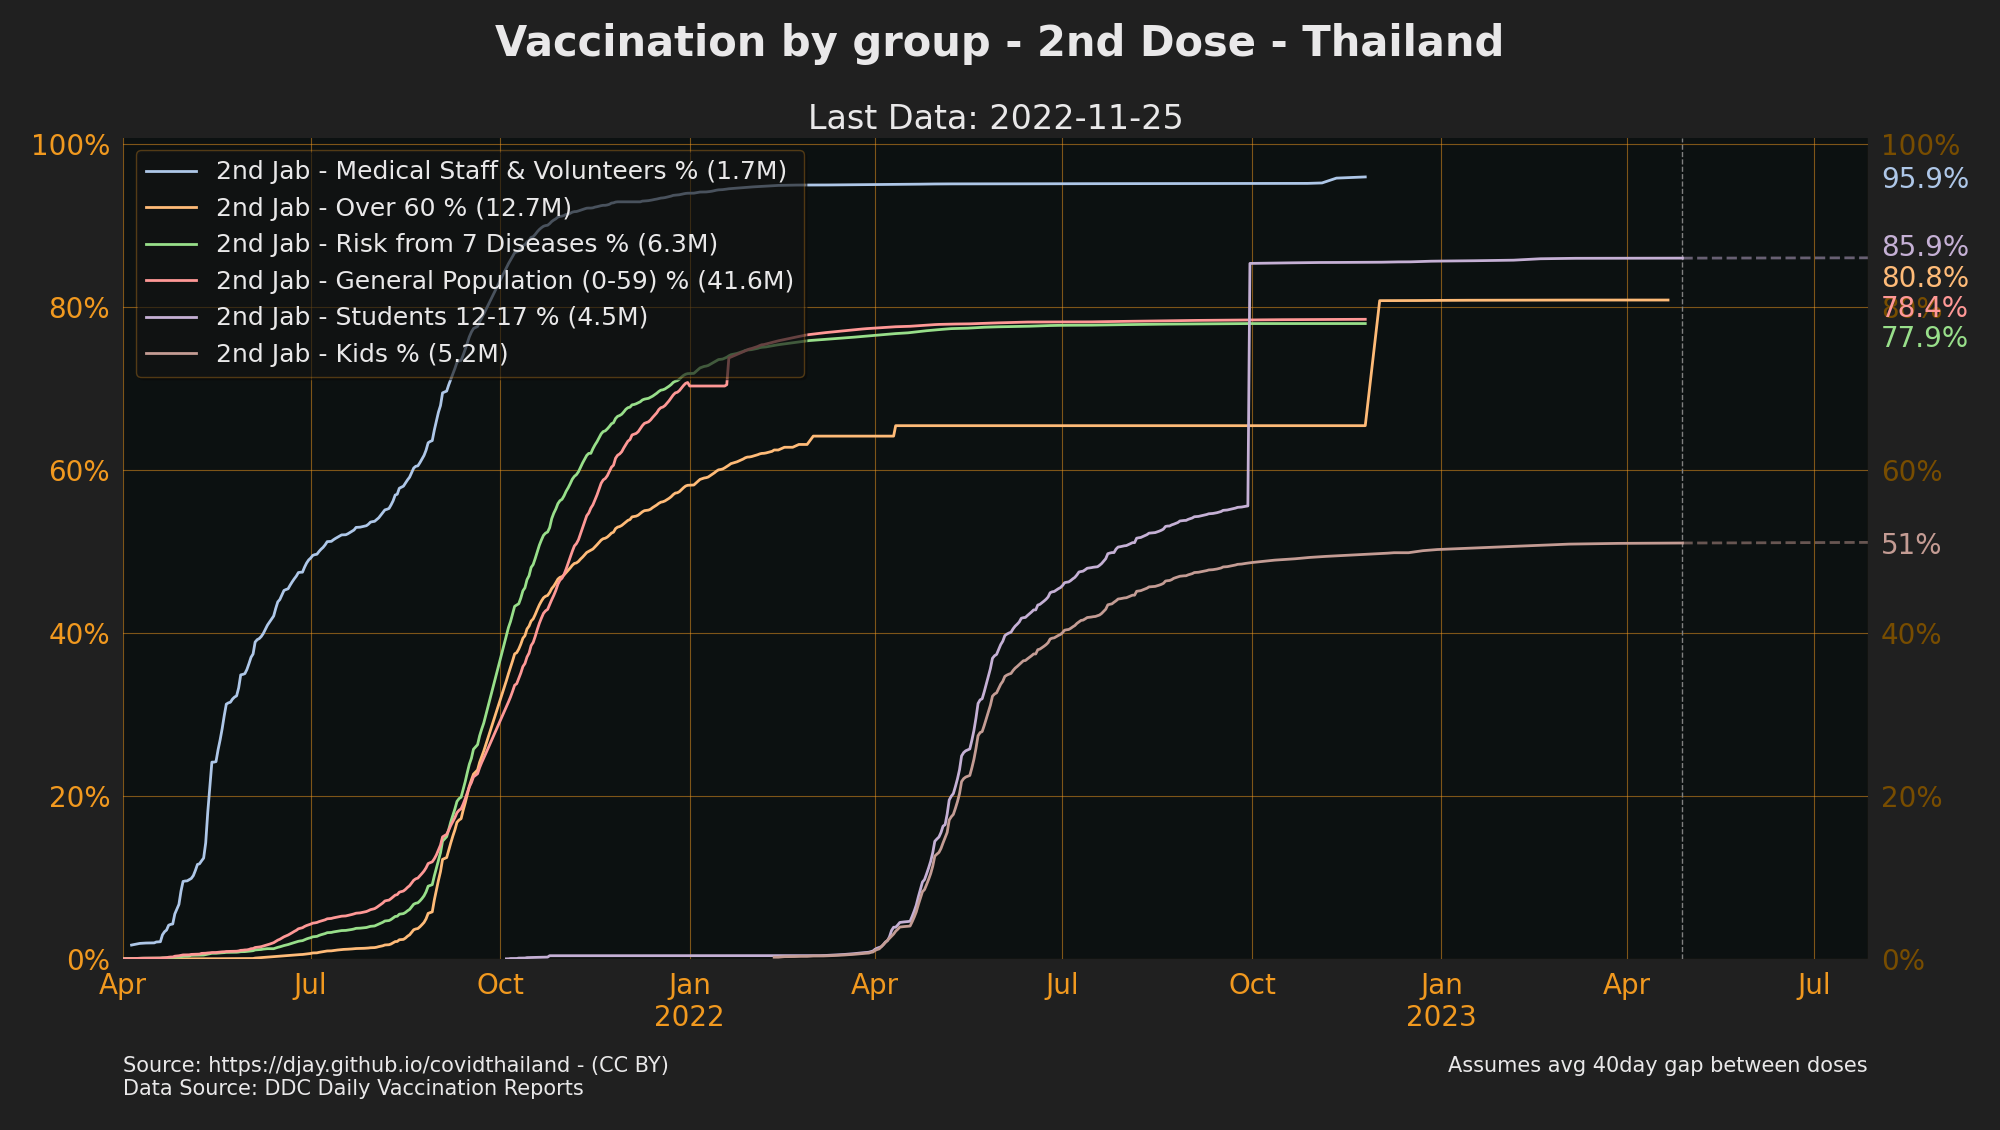 Progress towards Full Vaccination